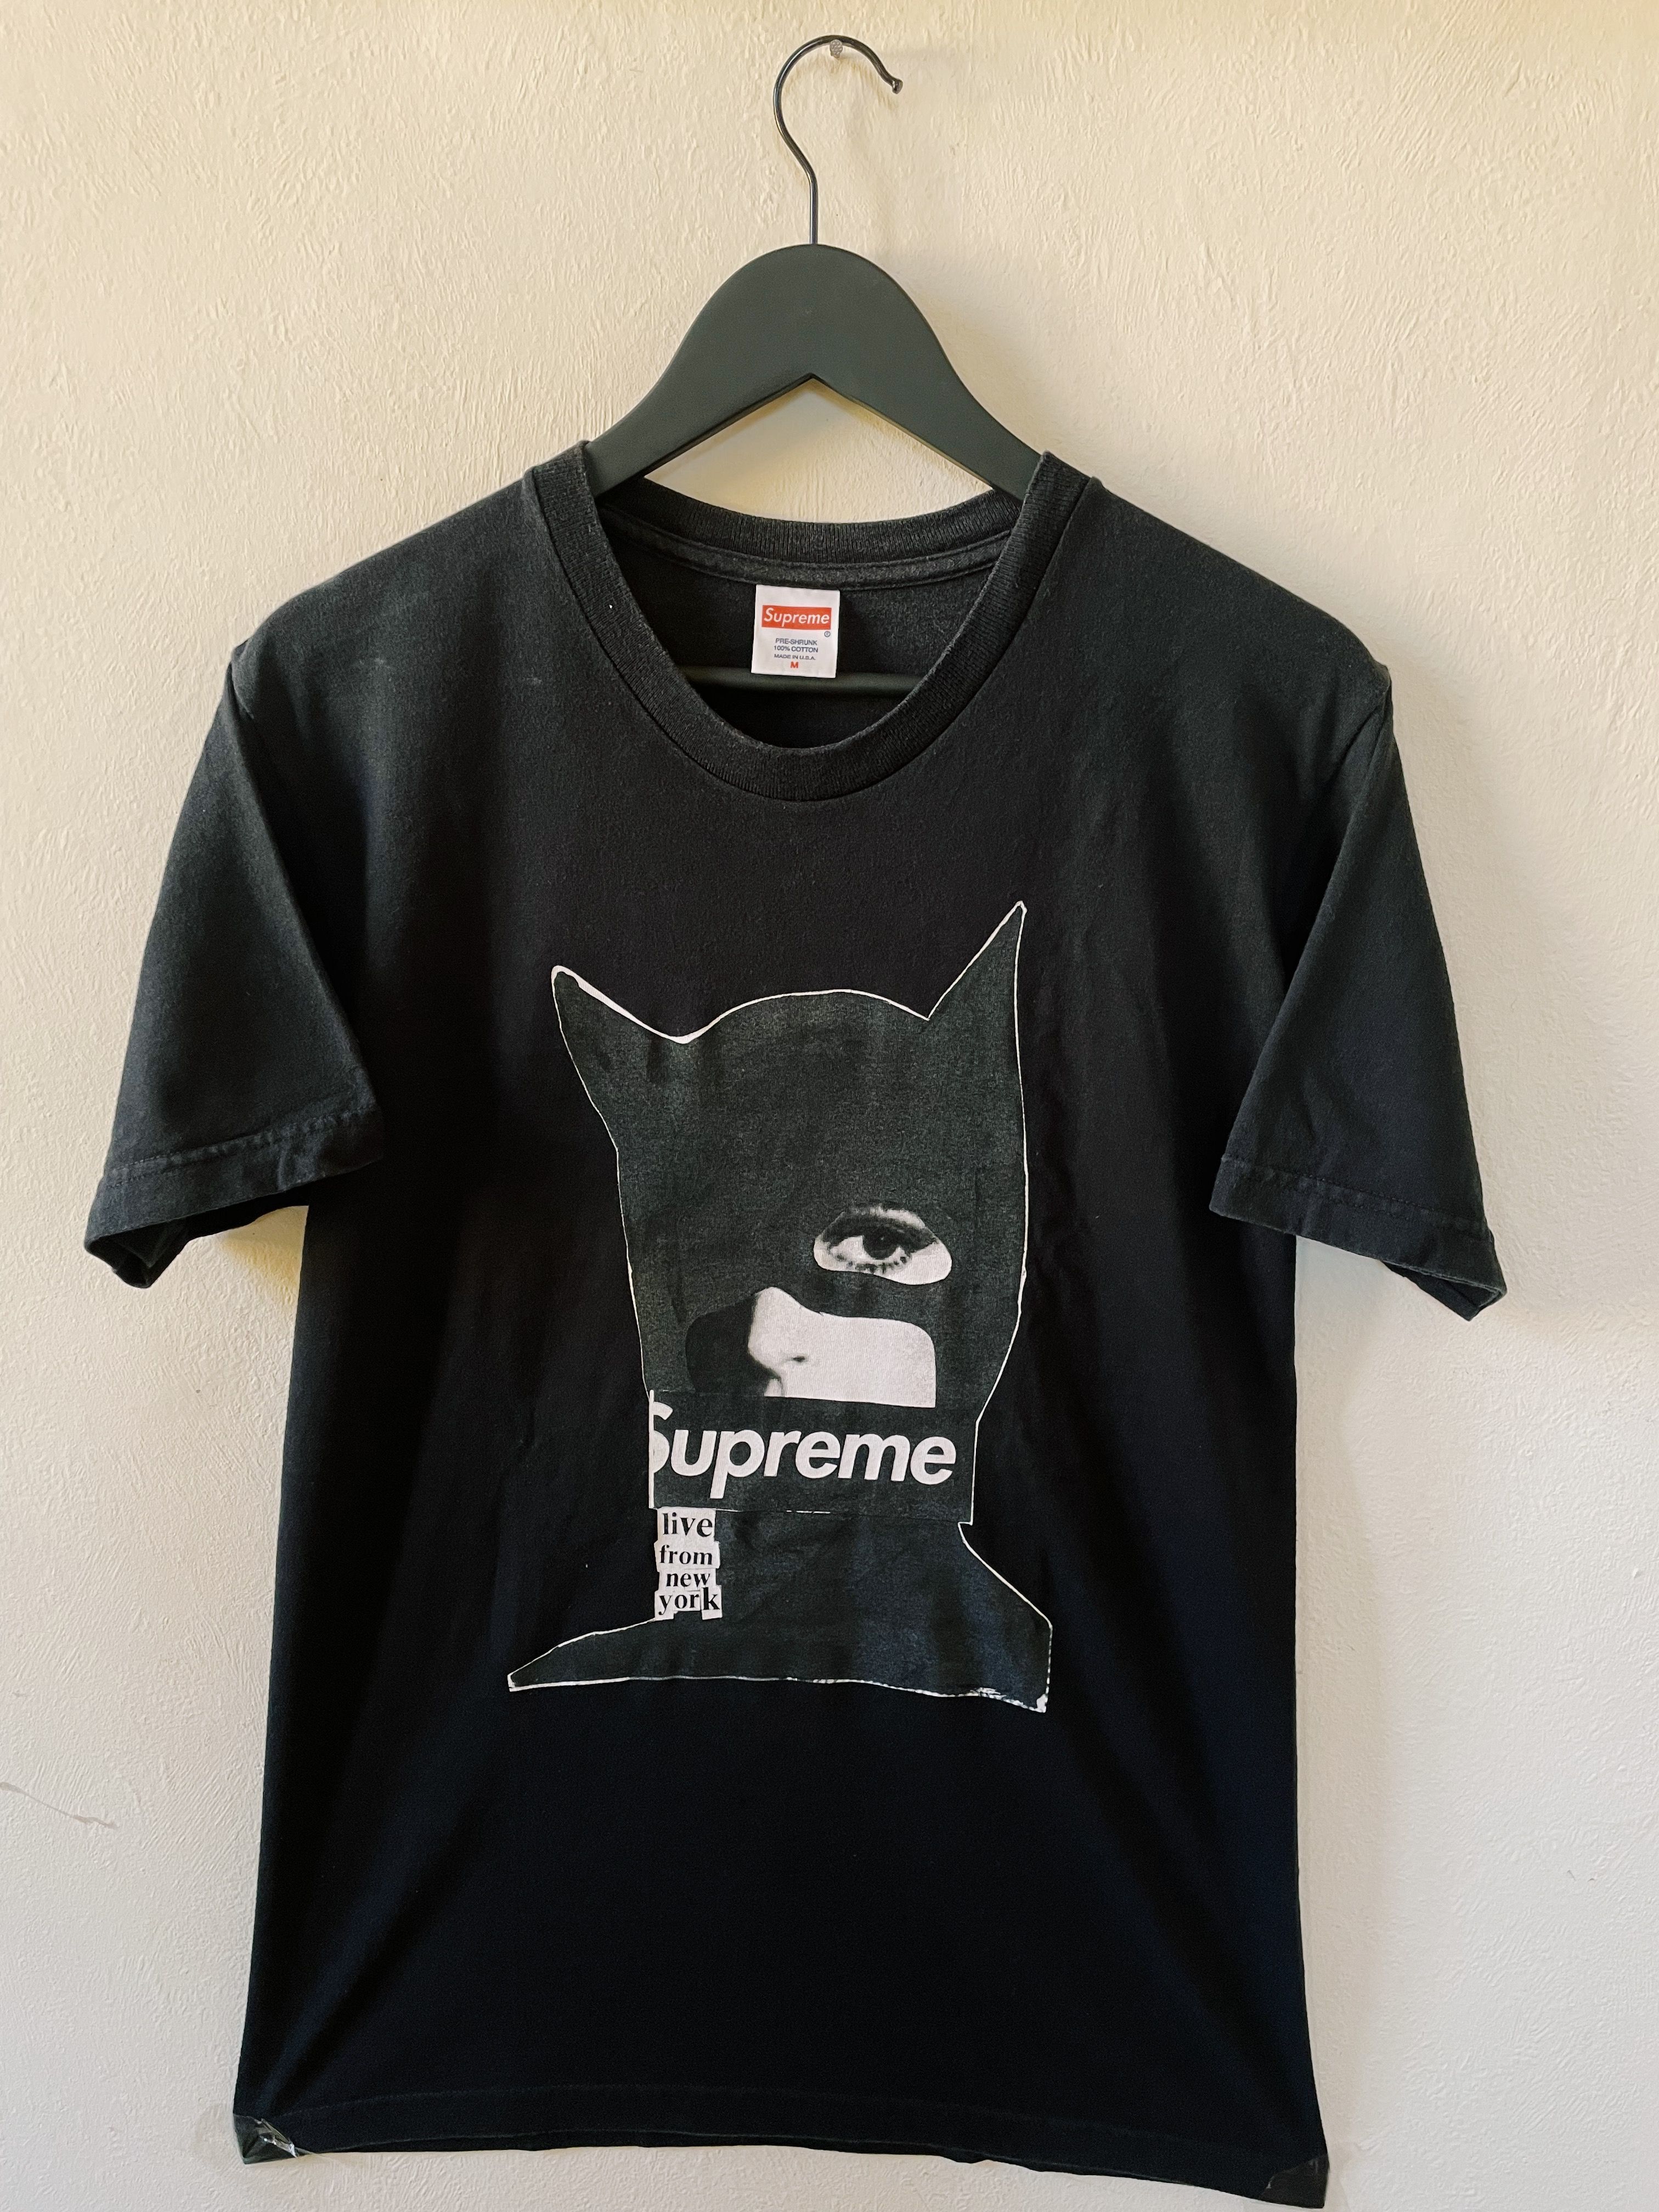 Supreme Supreme Catwoman Box Logo T shirt Black   Grailed